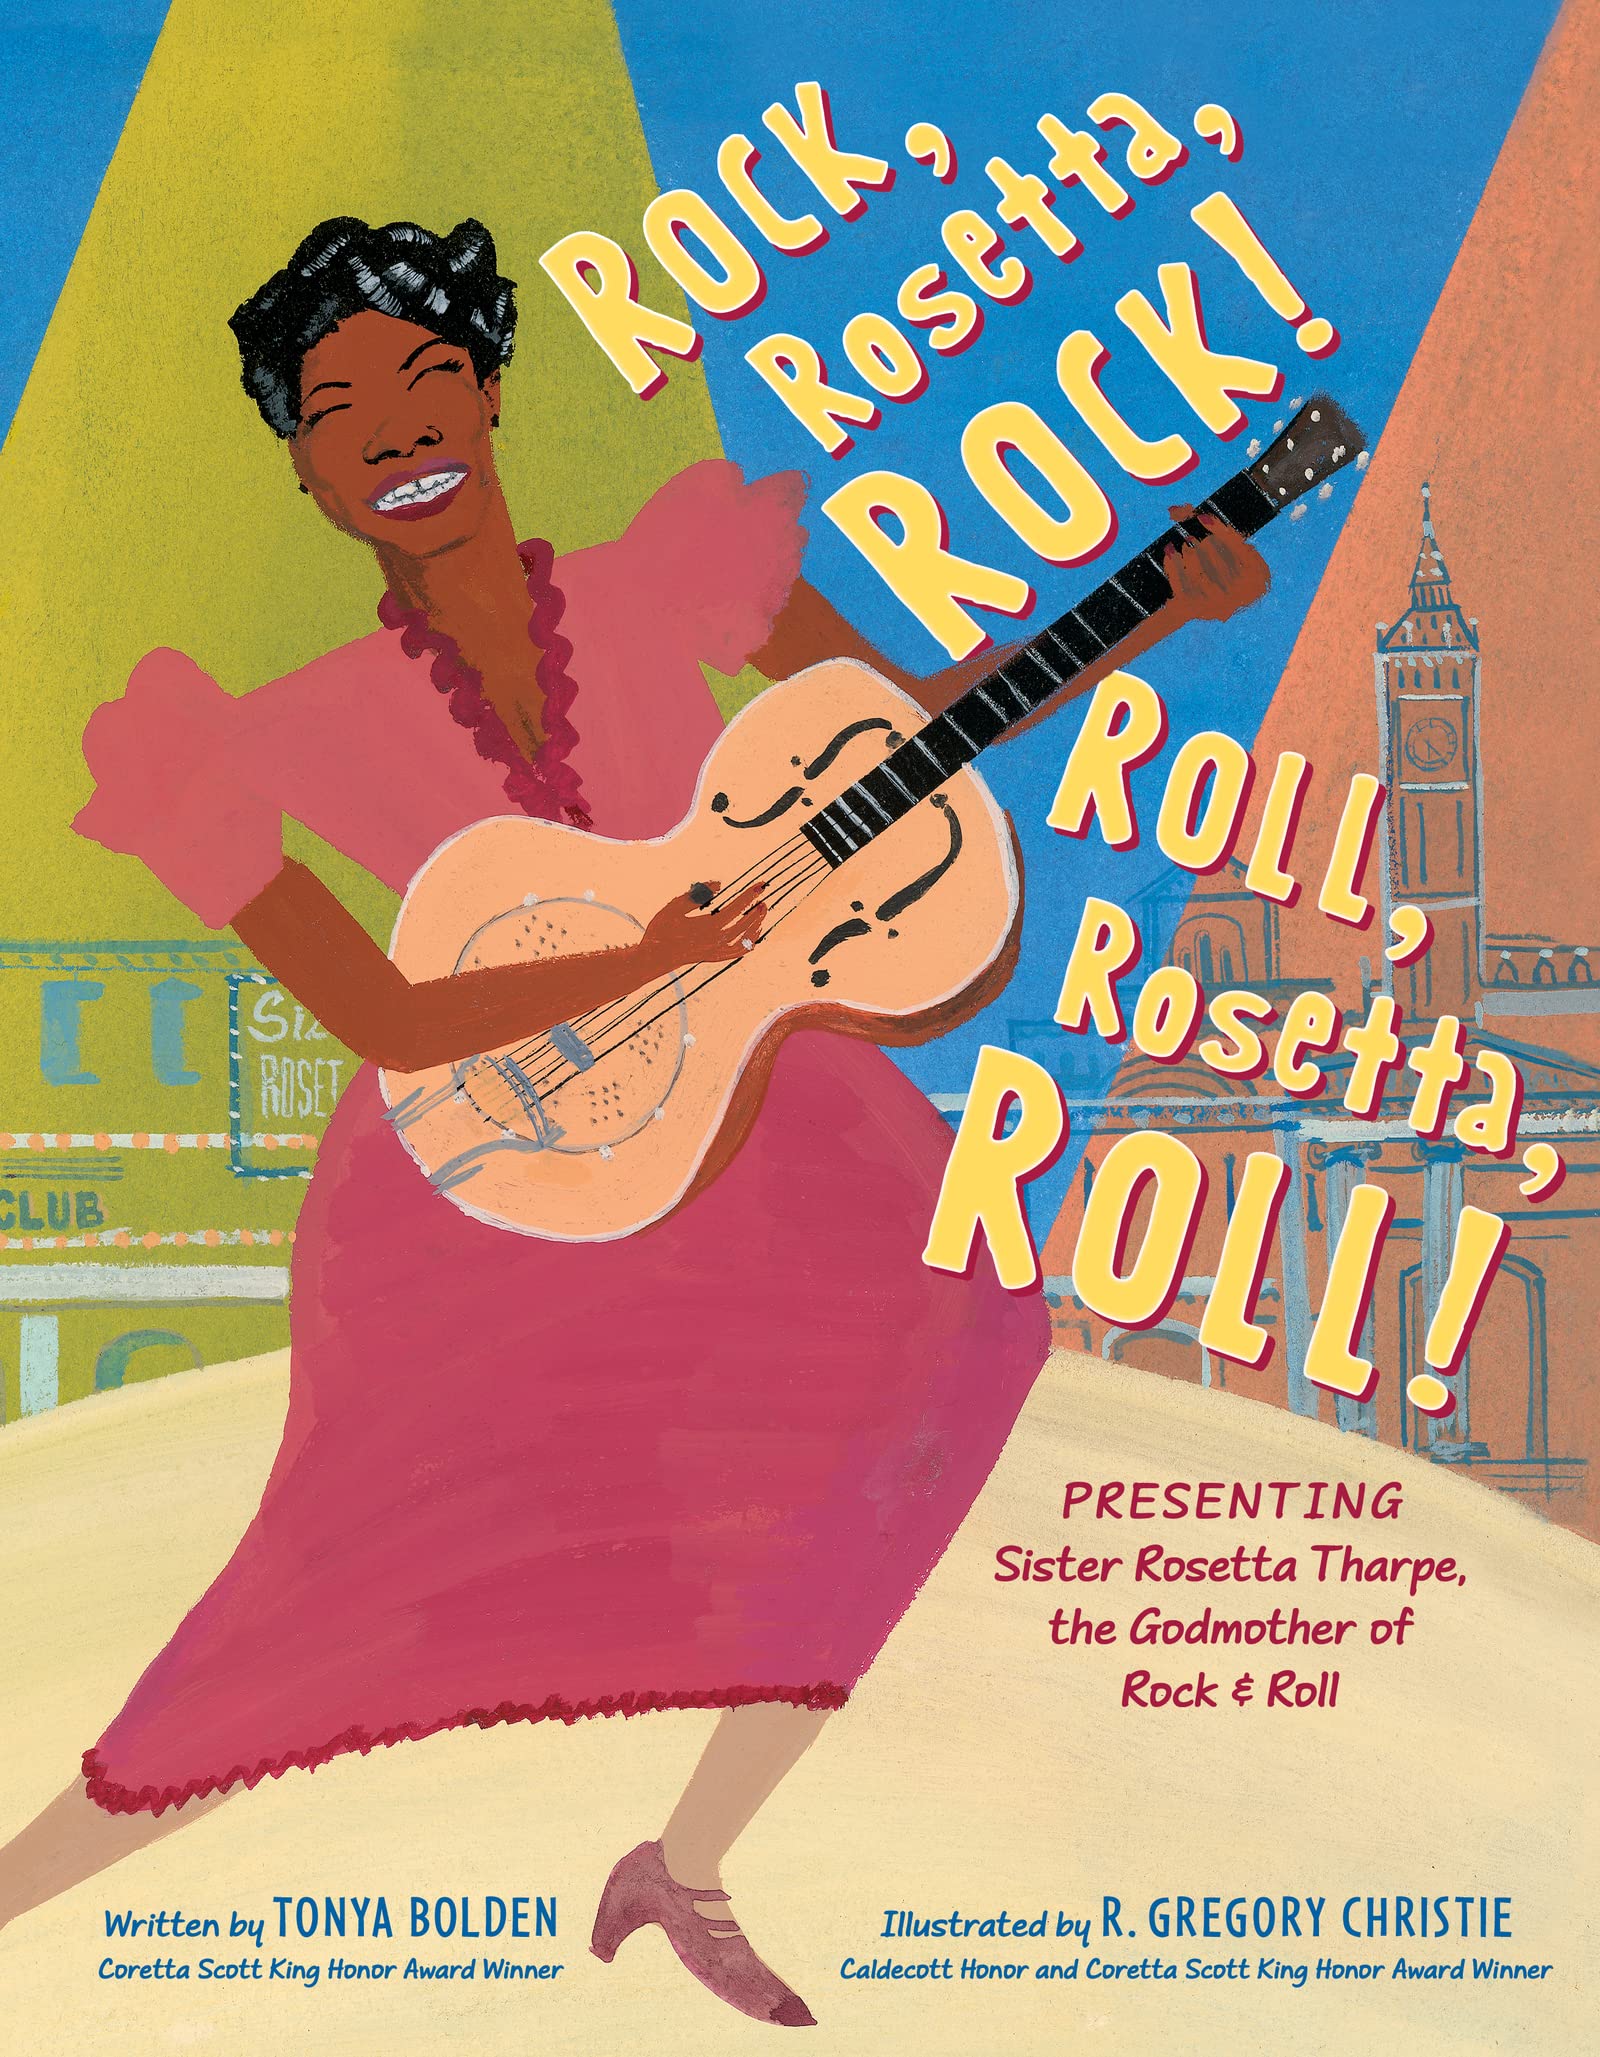 Rock, Rosetta, Rock! Roll, Rosetta, Roll! Presenting Sister Rosetta Tharpe, the Godmother of Rock & Roll